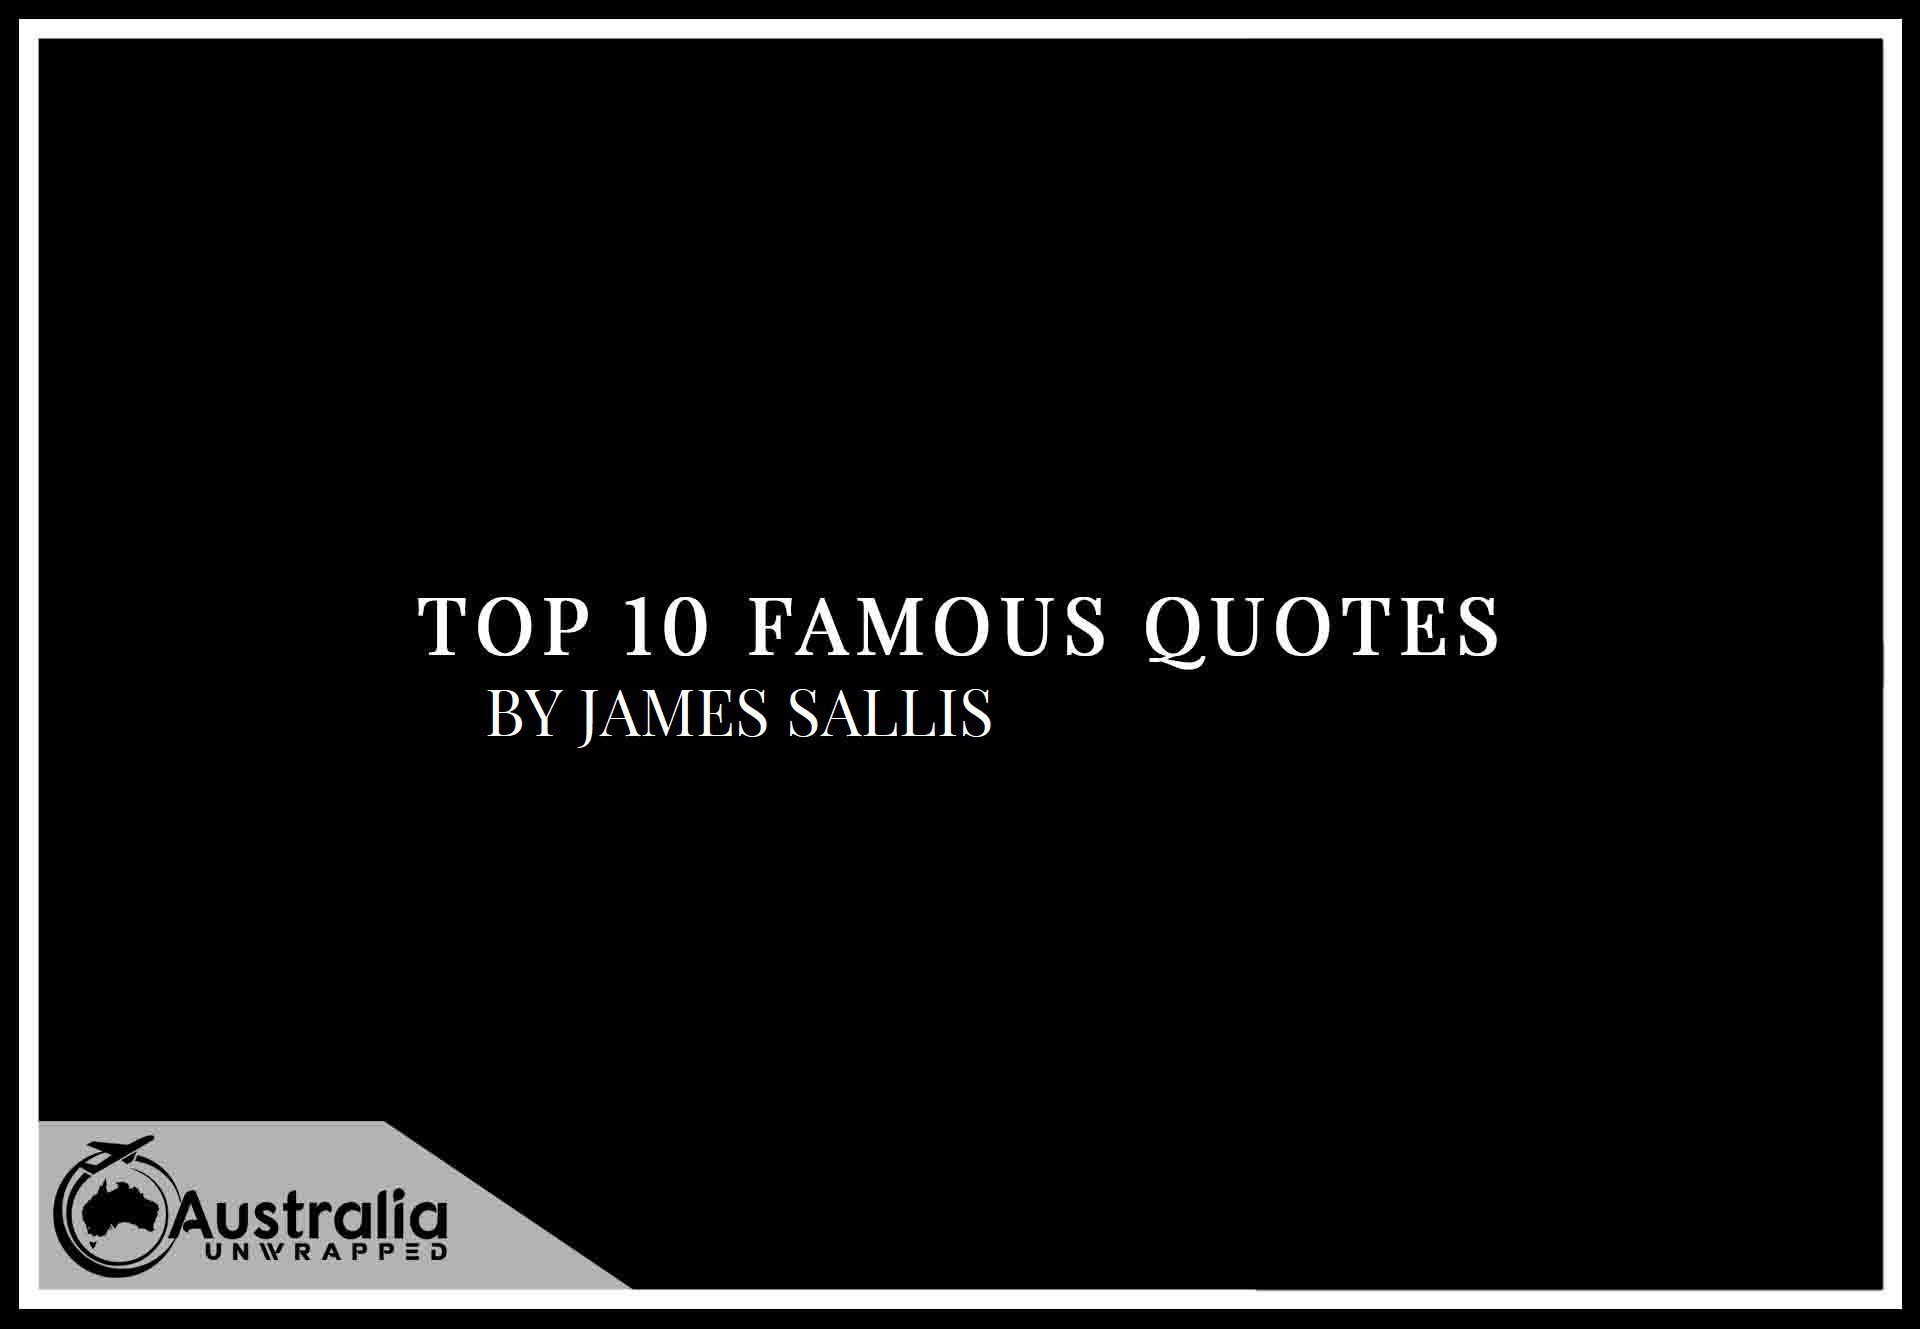 Top 10 Famous Quotes by Author James Sallis